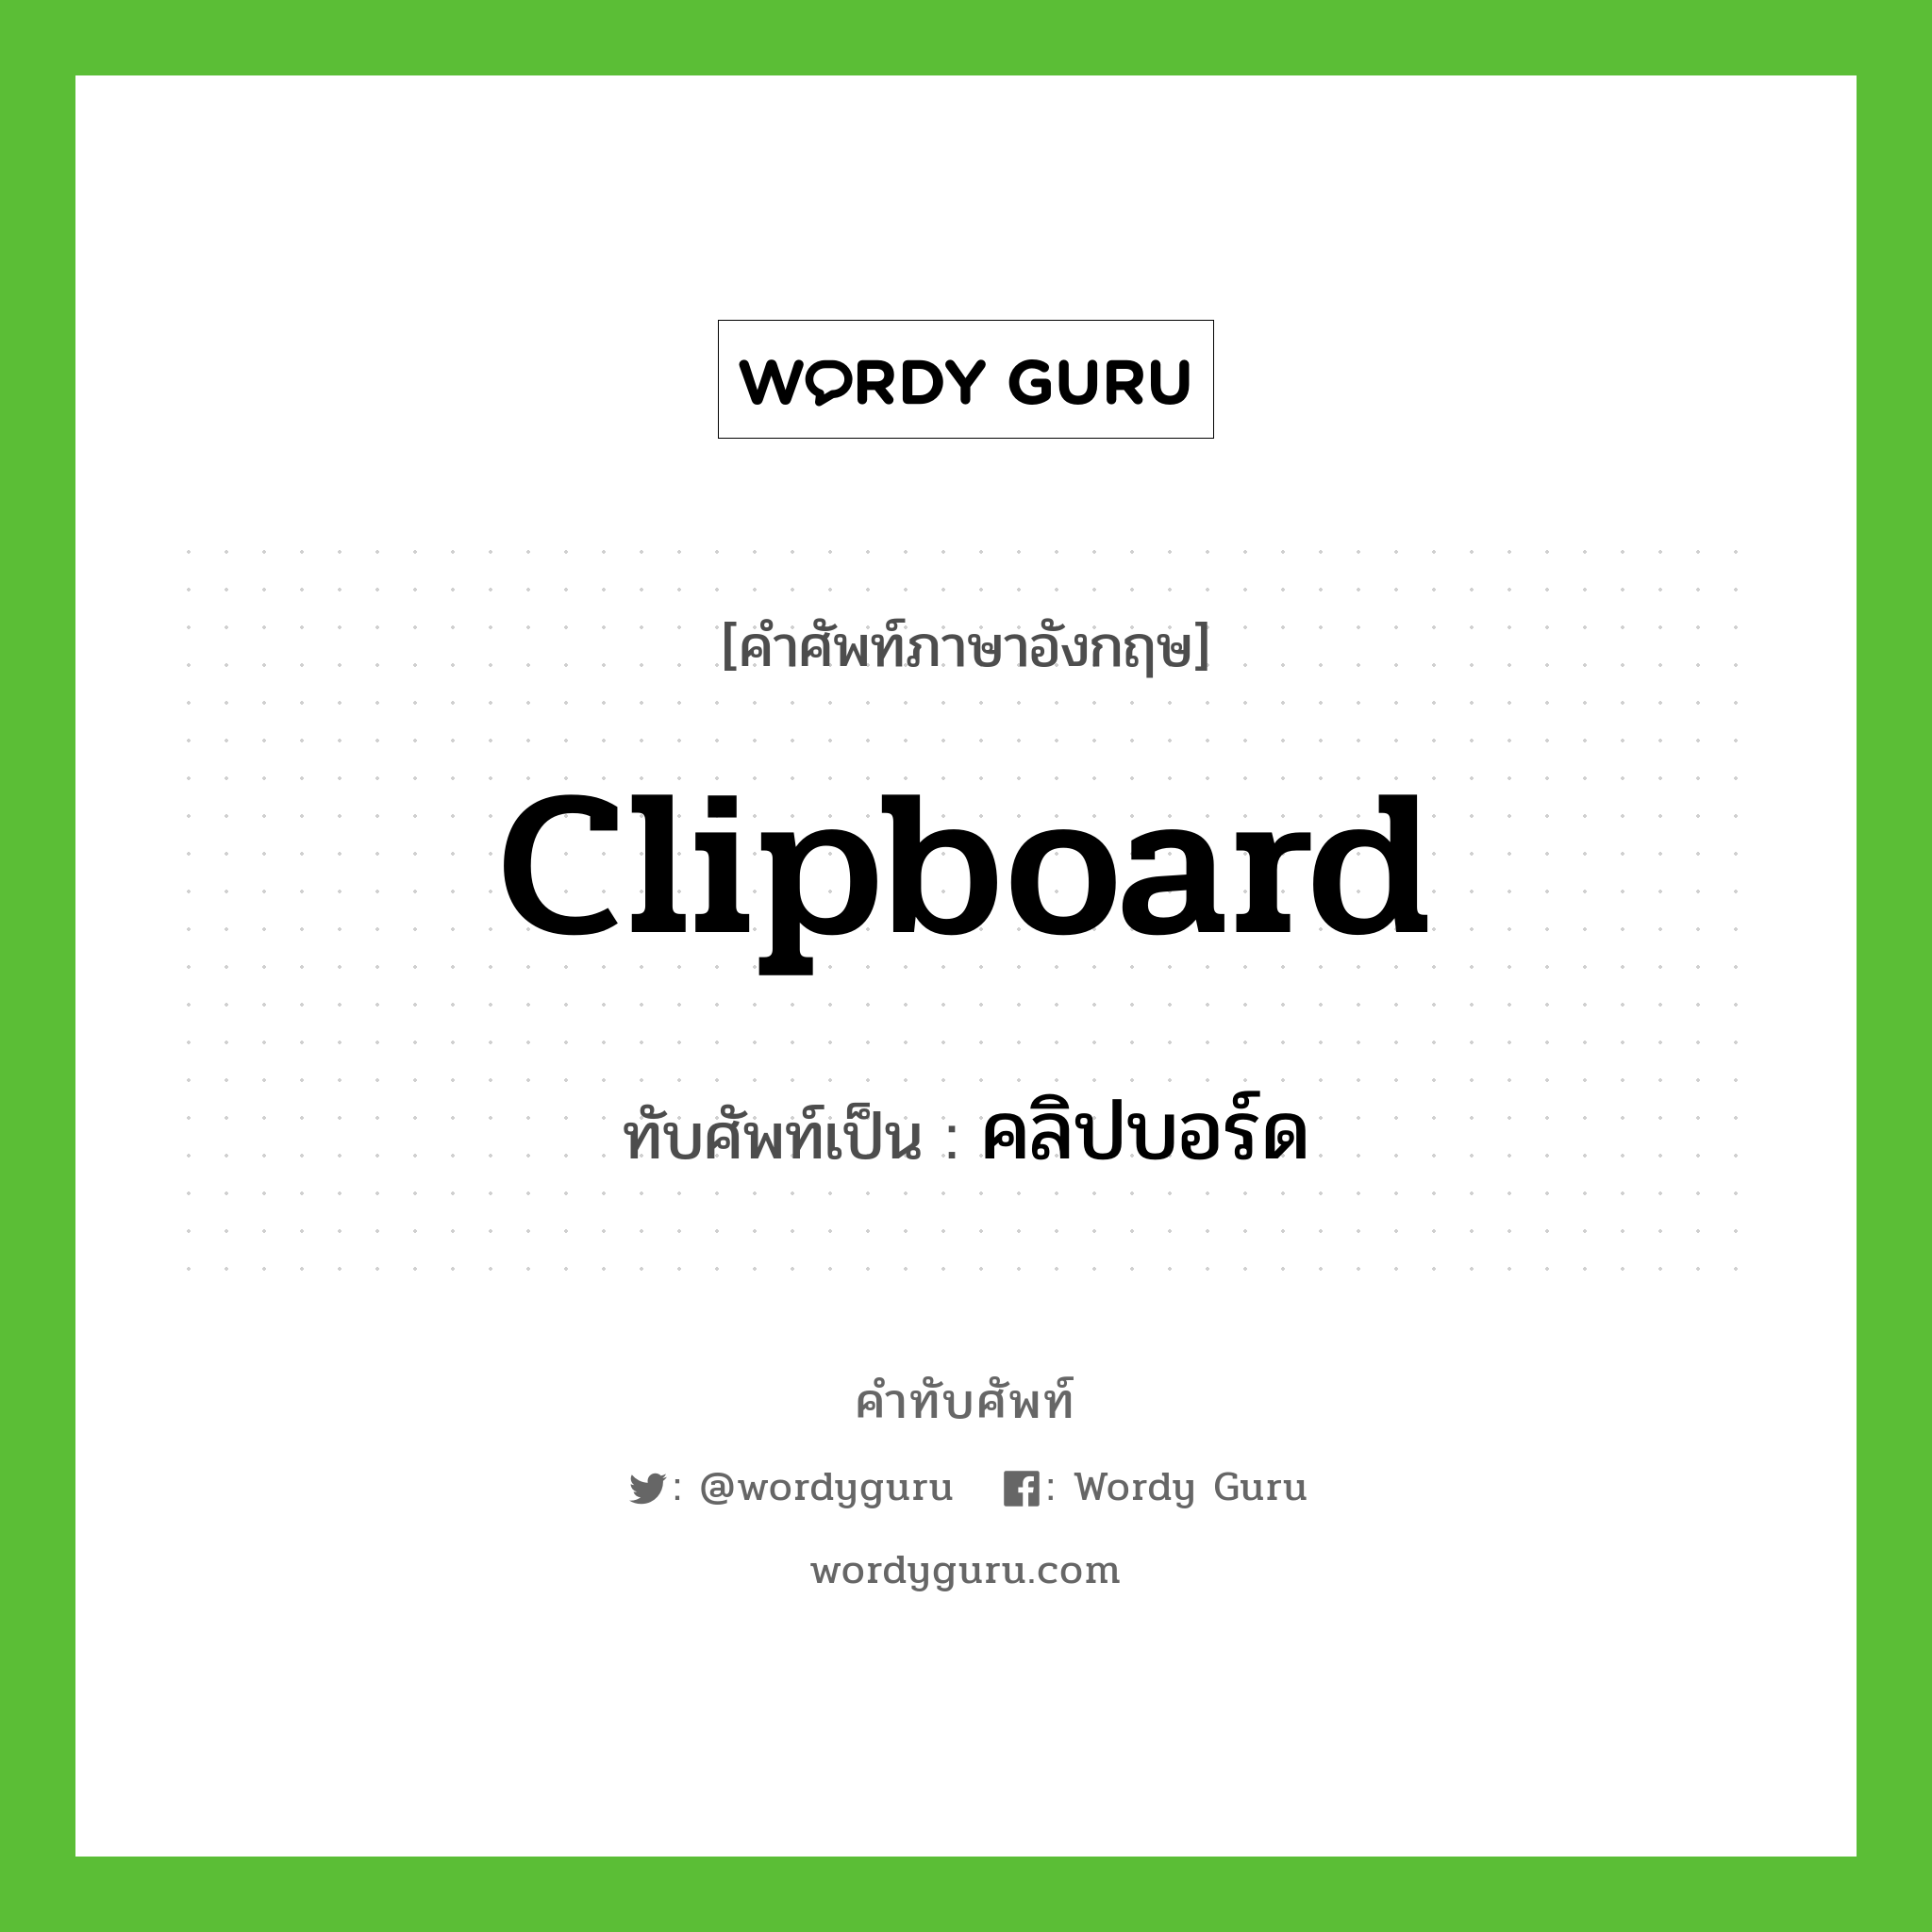 clipboard เขียนเป็นคำไทยว่าอะไร?, คำศัพท์ภาษาอังกฤษ clipboard ทับศัพท์เป็น คลิปบอร์ด